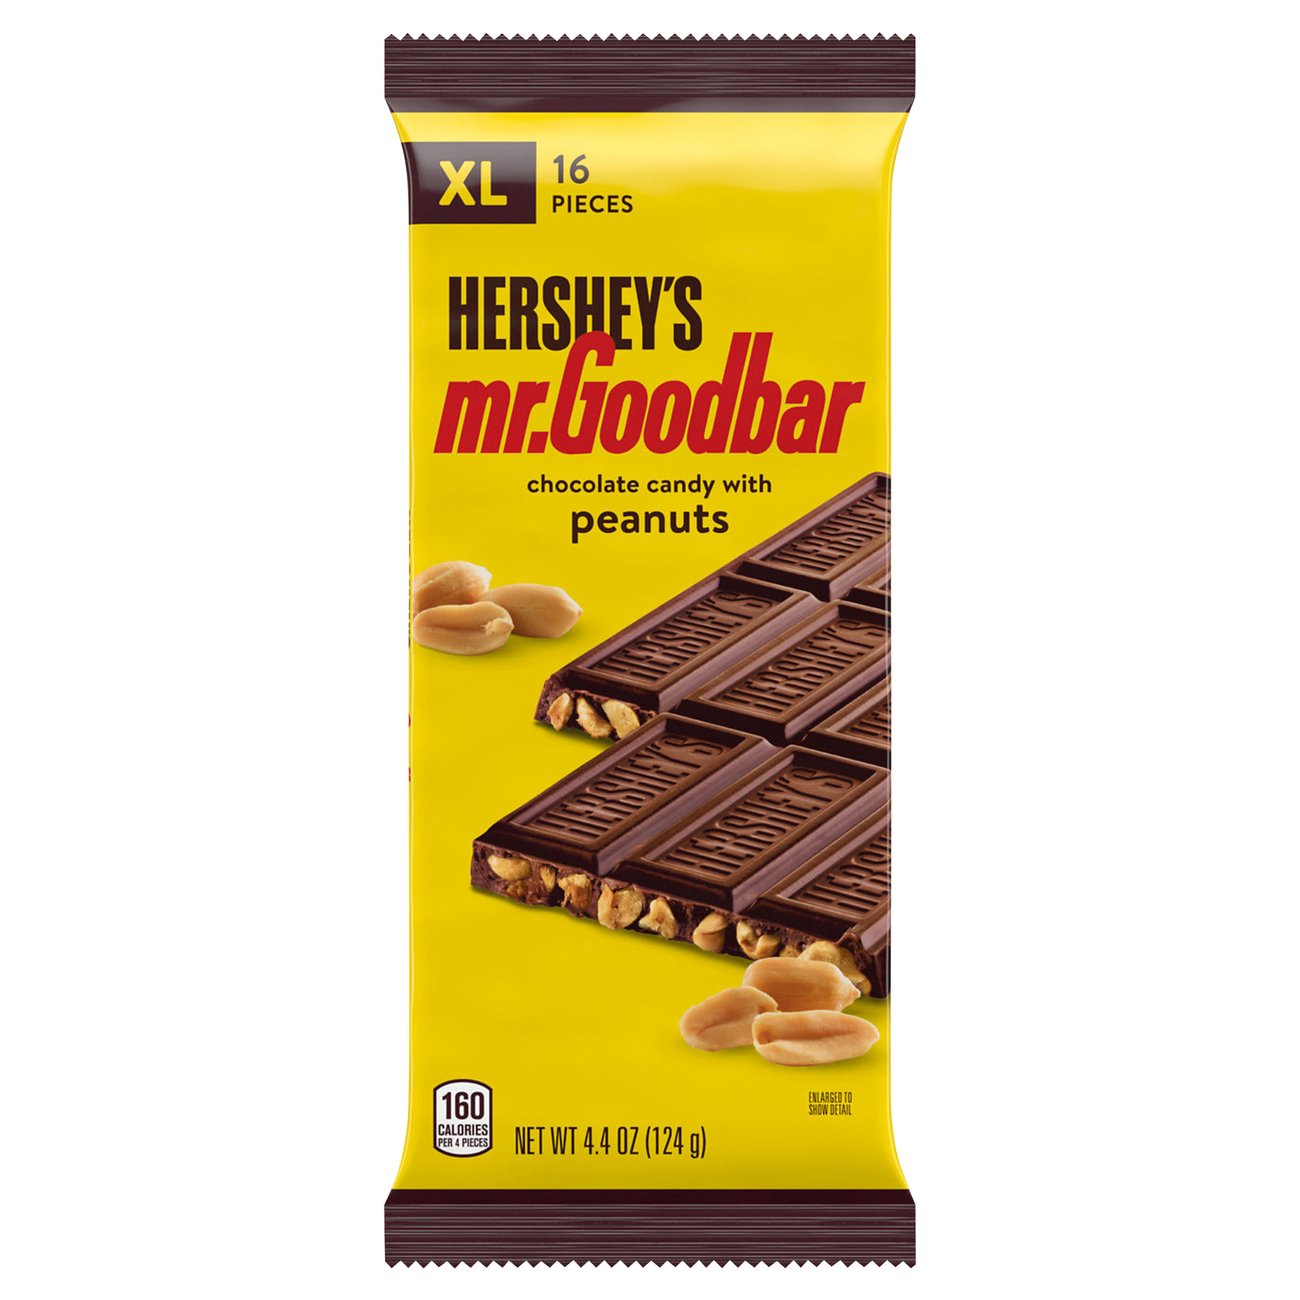 Mr Goodbar Extra Large Chocolate Candy Bar Shop Candy At H E B 